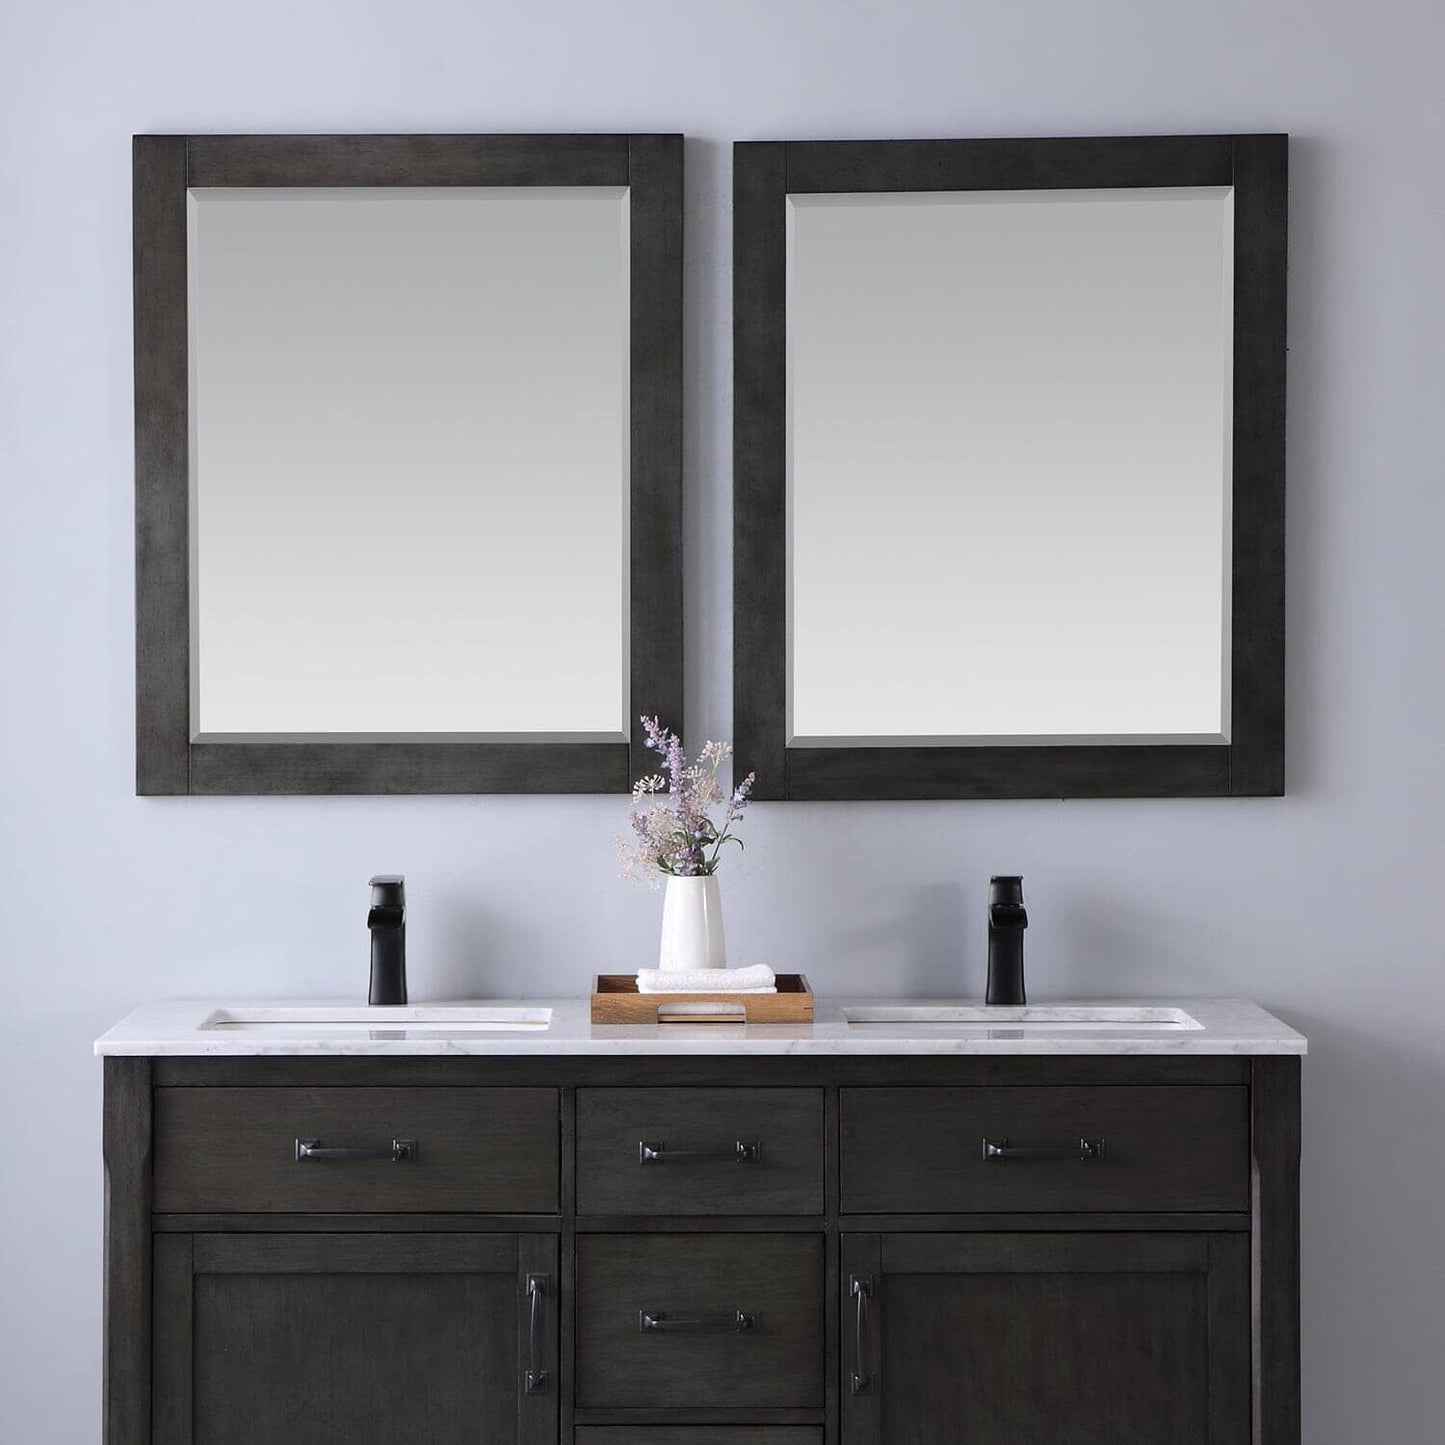 Bathroom Mirror - Altair Maribella 28W x 36H -535030-MIR-RL